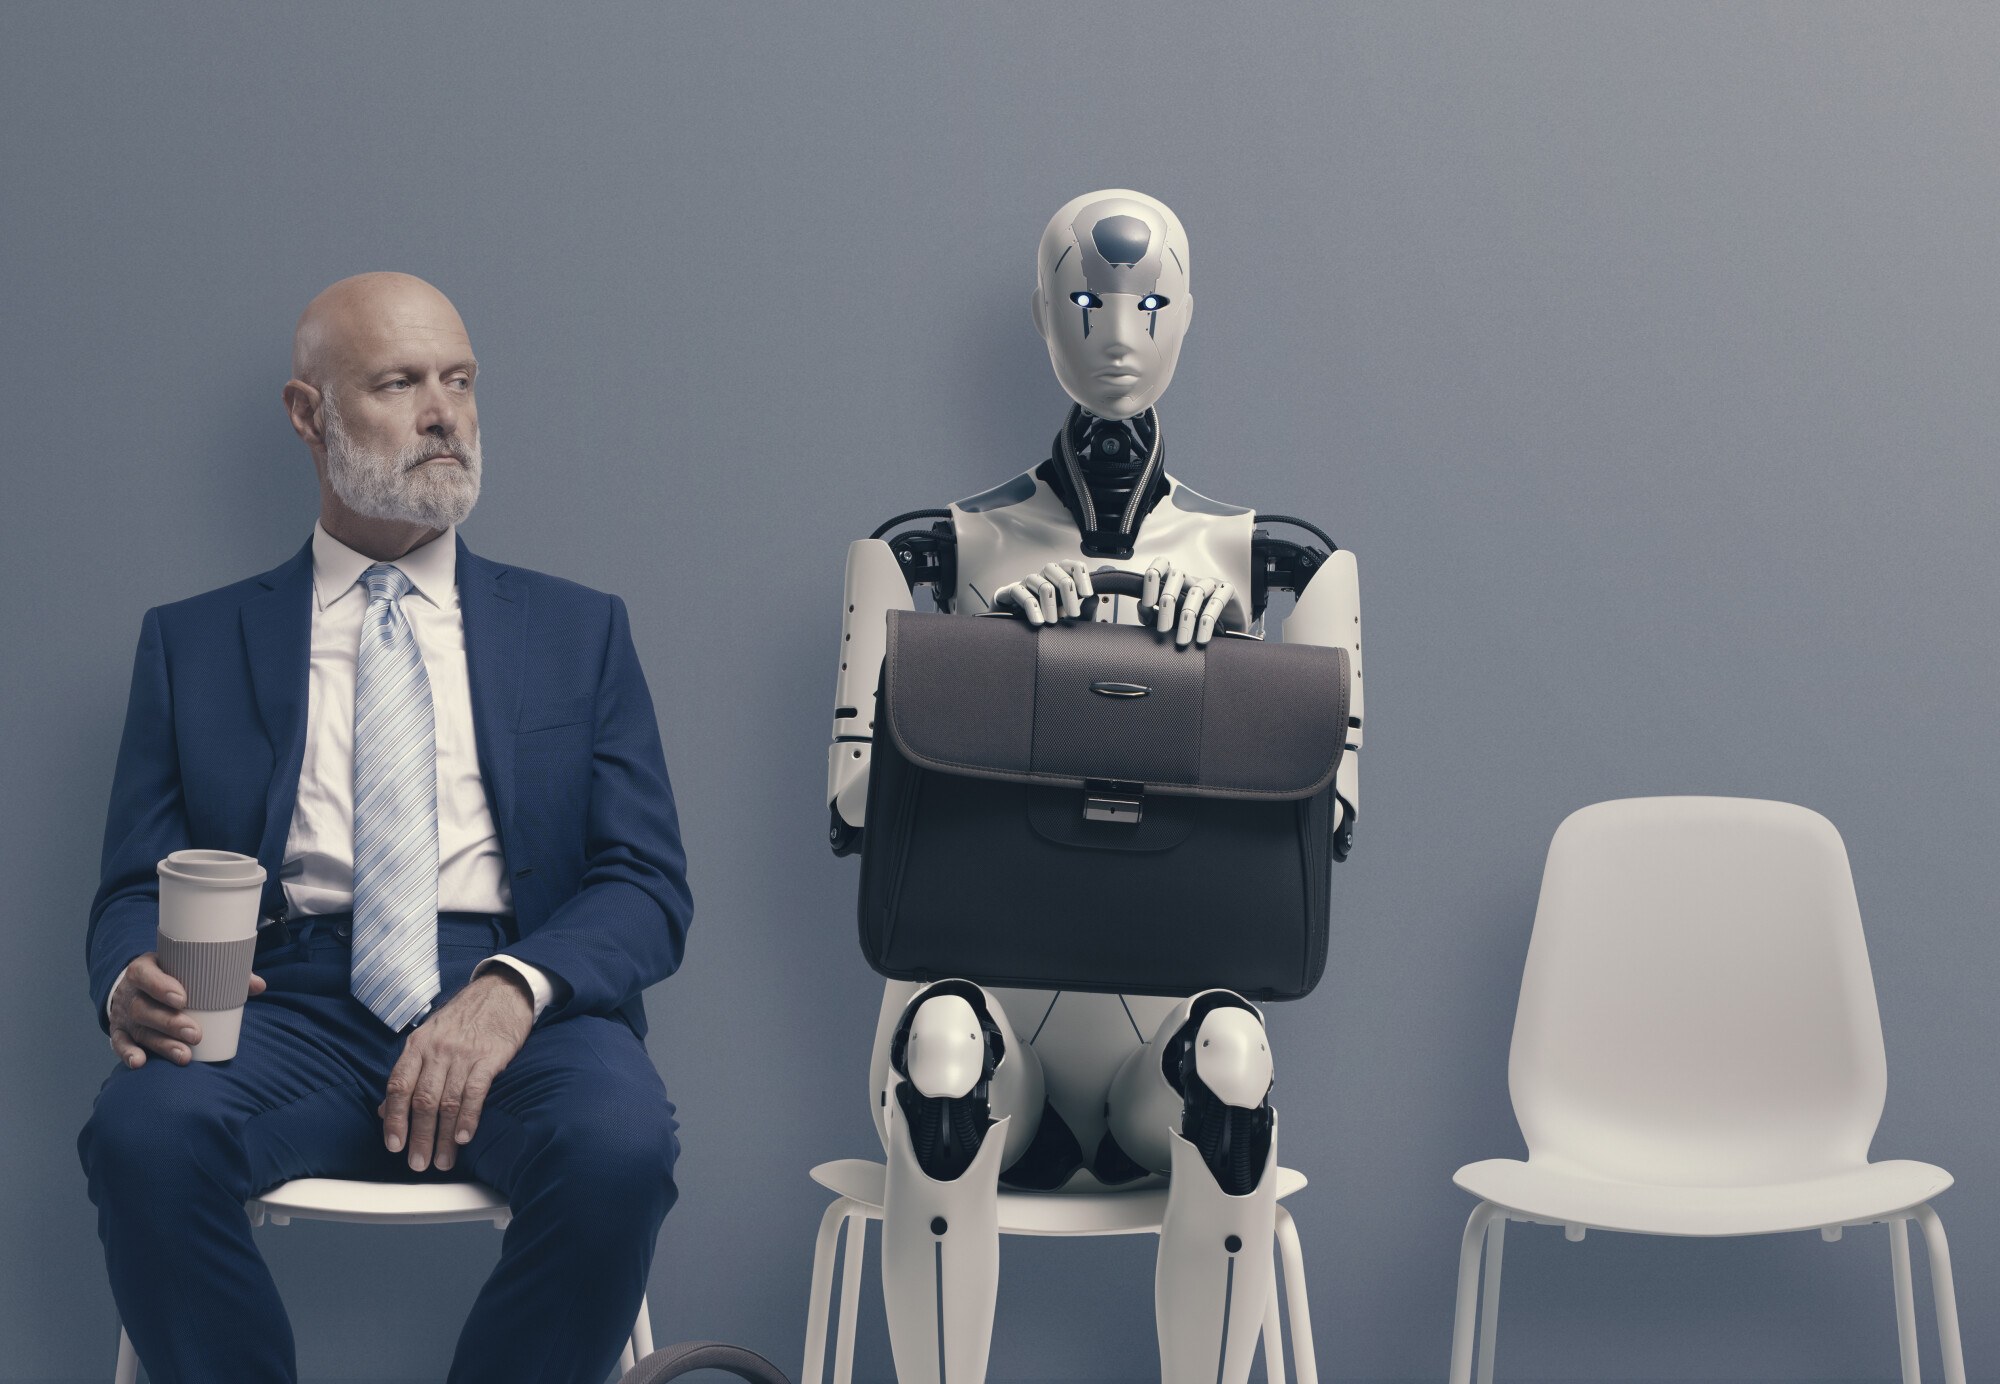 AI Robot Waiting for Job Interview